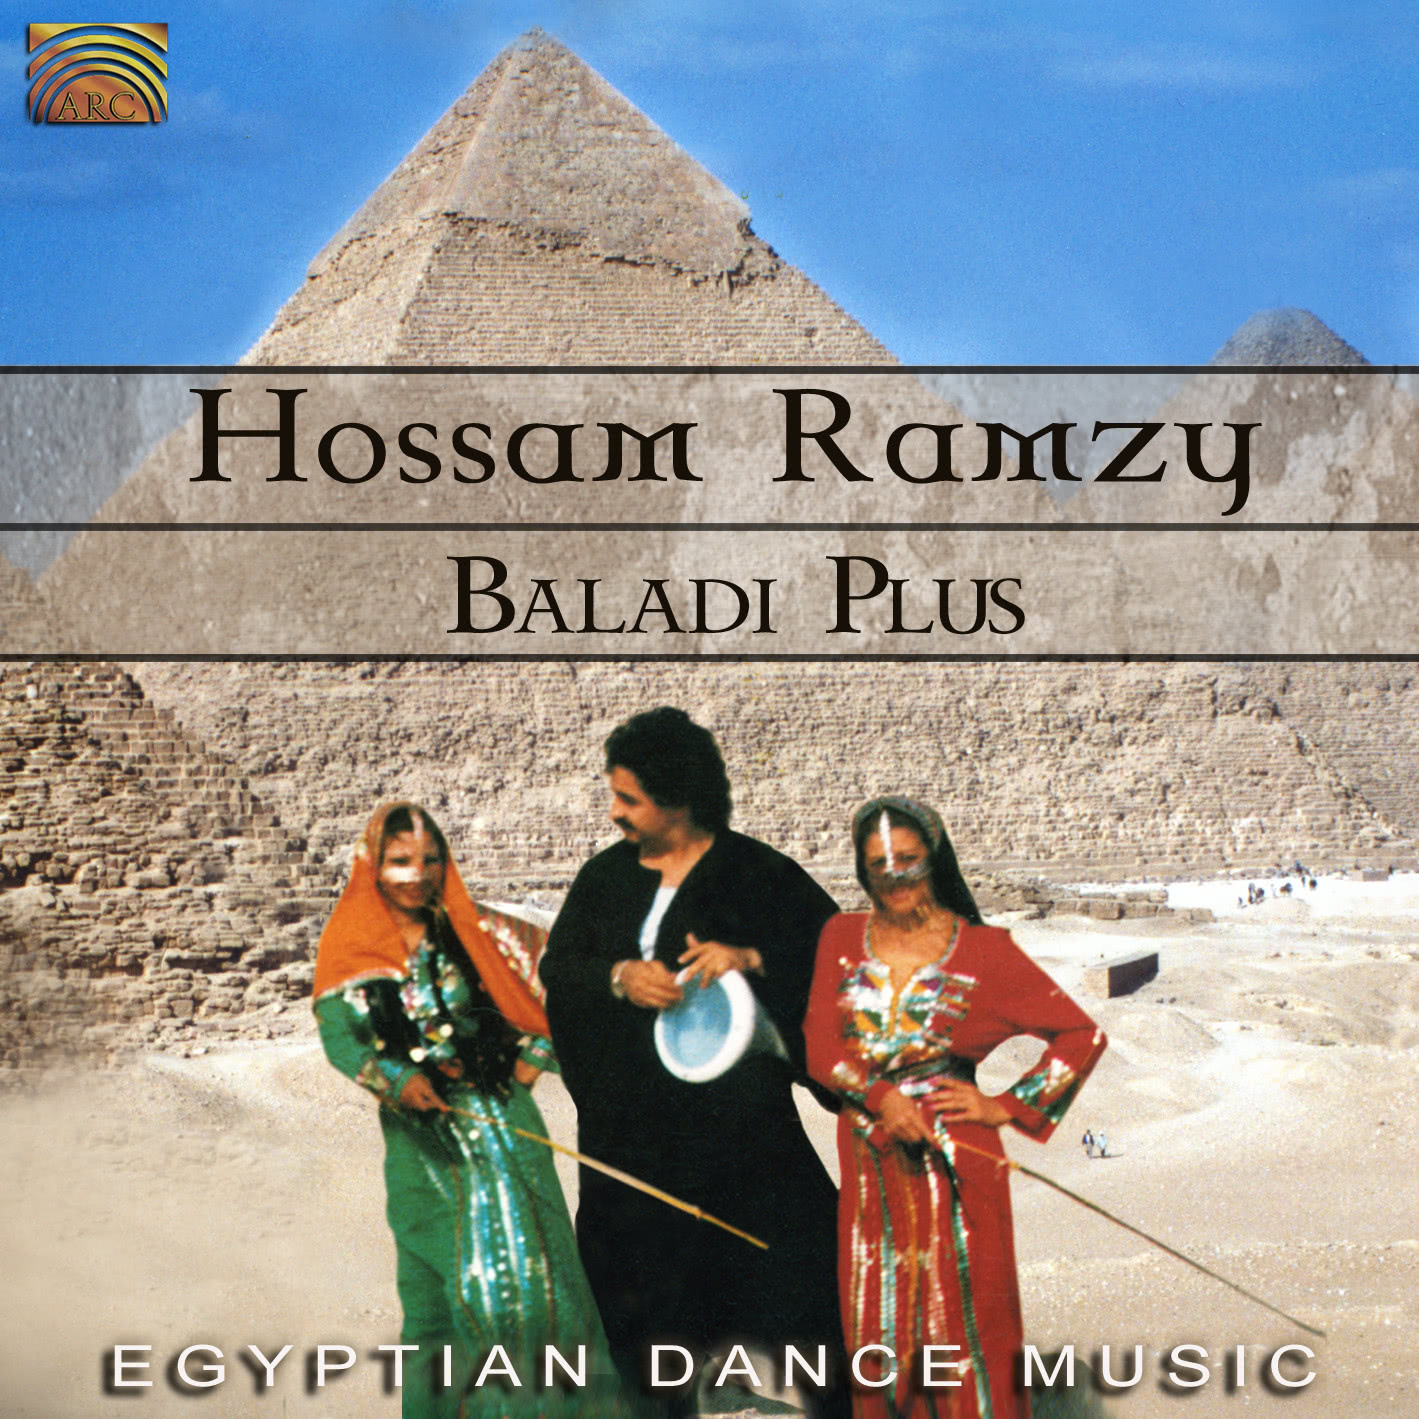 EUCD2361 Baladi Plus - Egyptian Dance Music